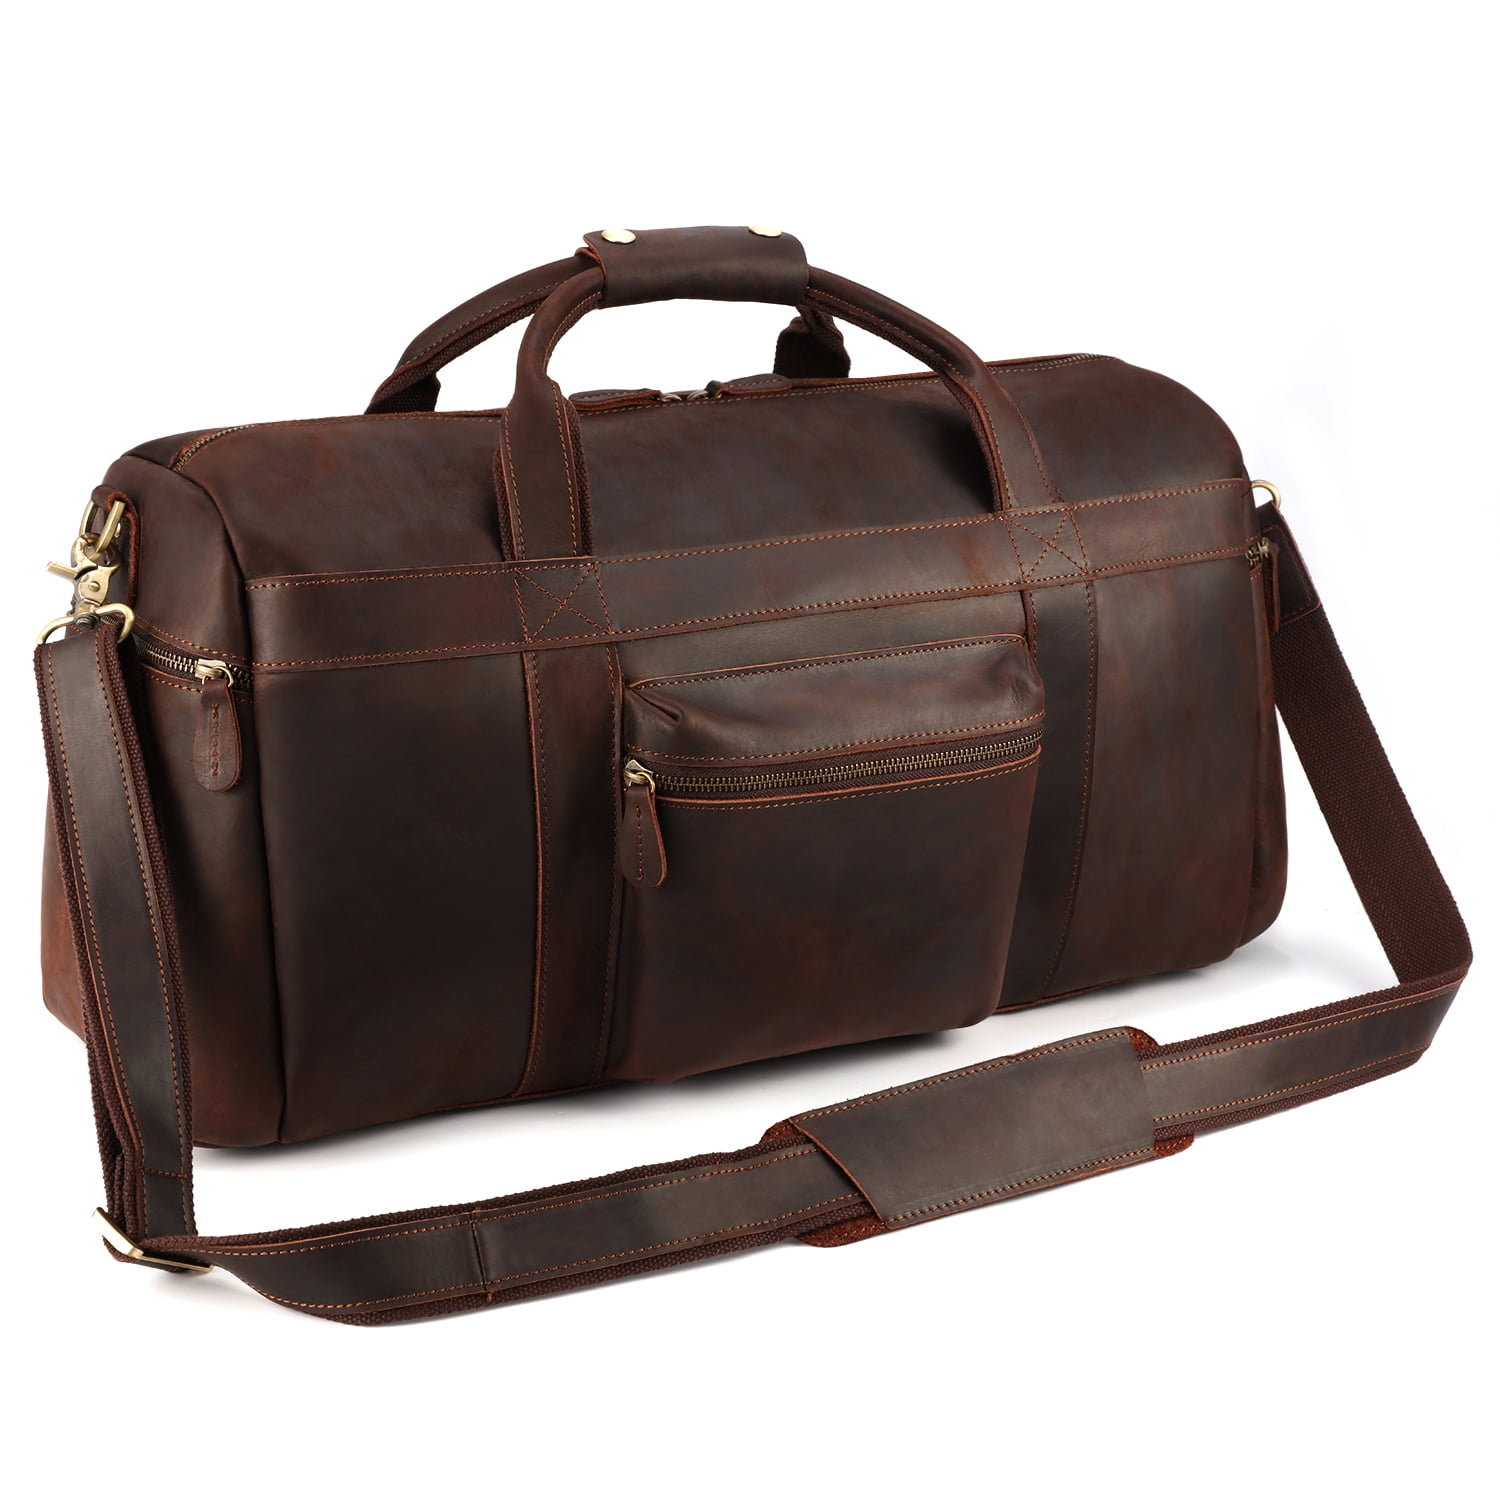 Kattee Retro Leather Duffel Bag Large Overnight Travel Bag - 0